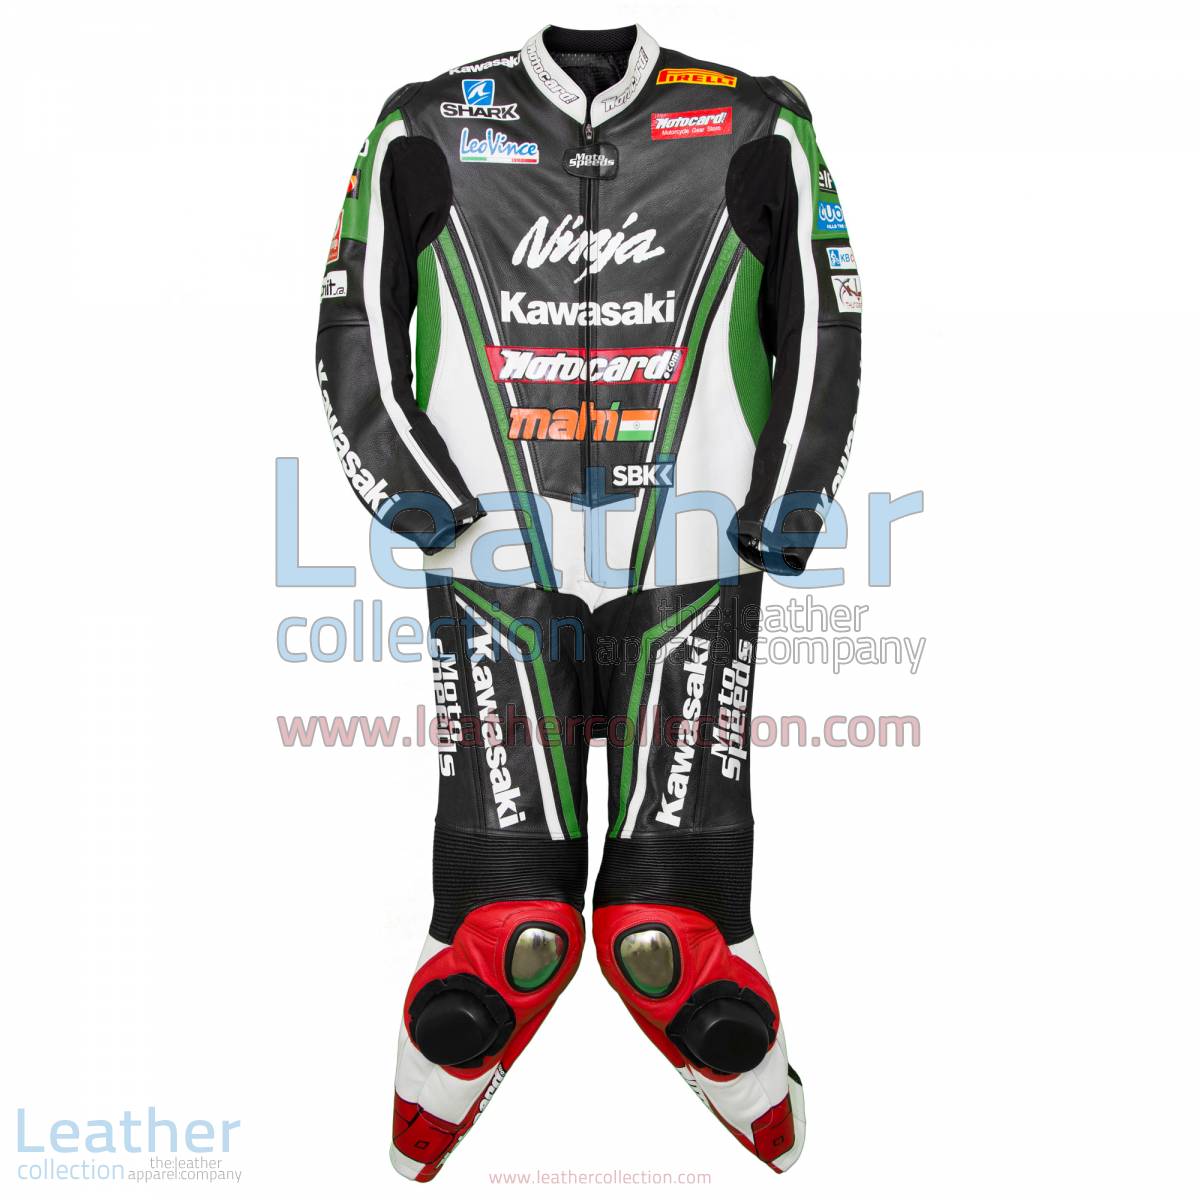 Kawasaki Ninja Tom Sykes 2013 Champion Leathers